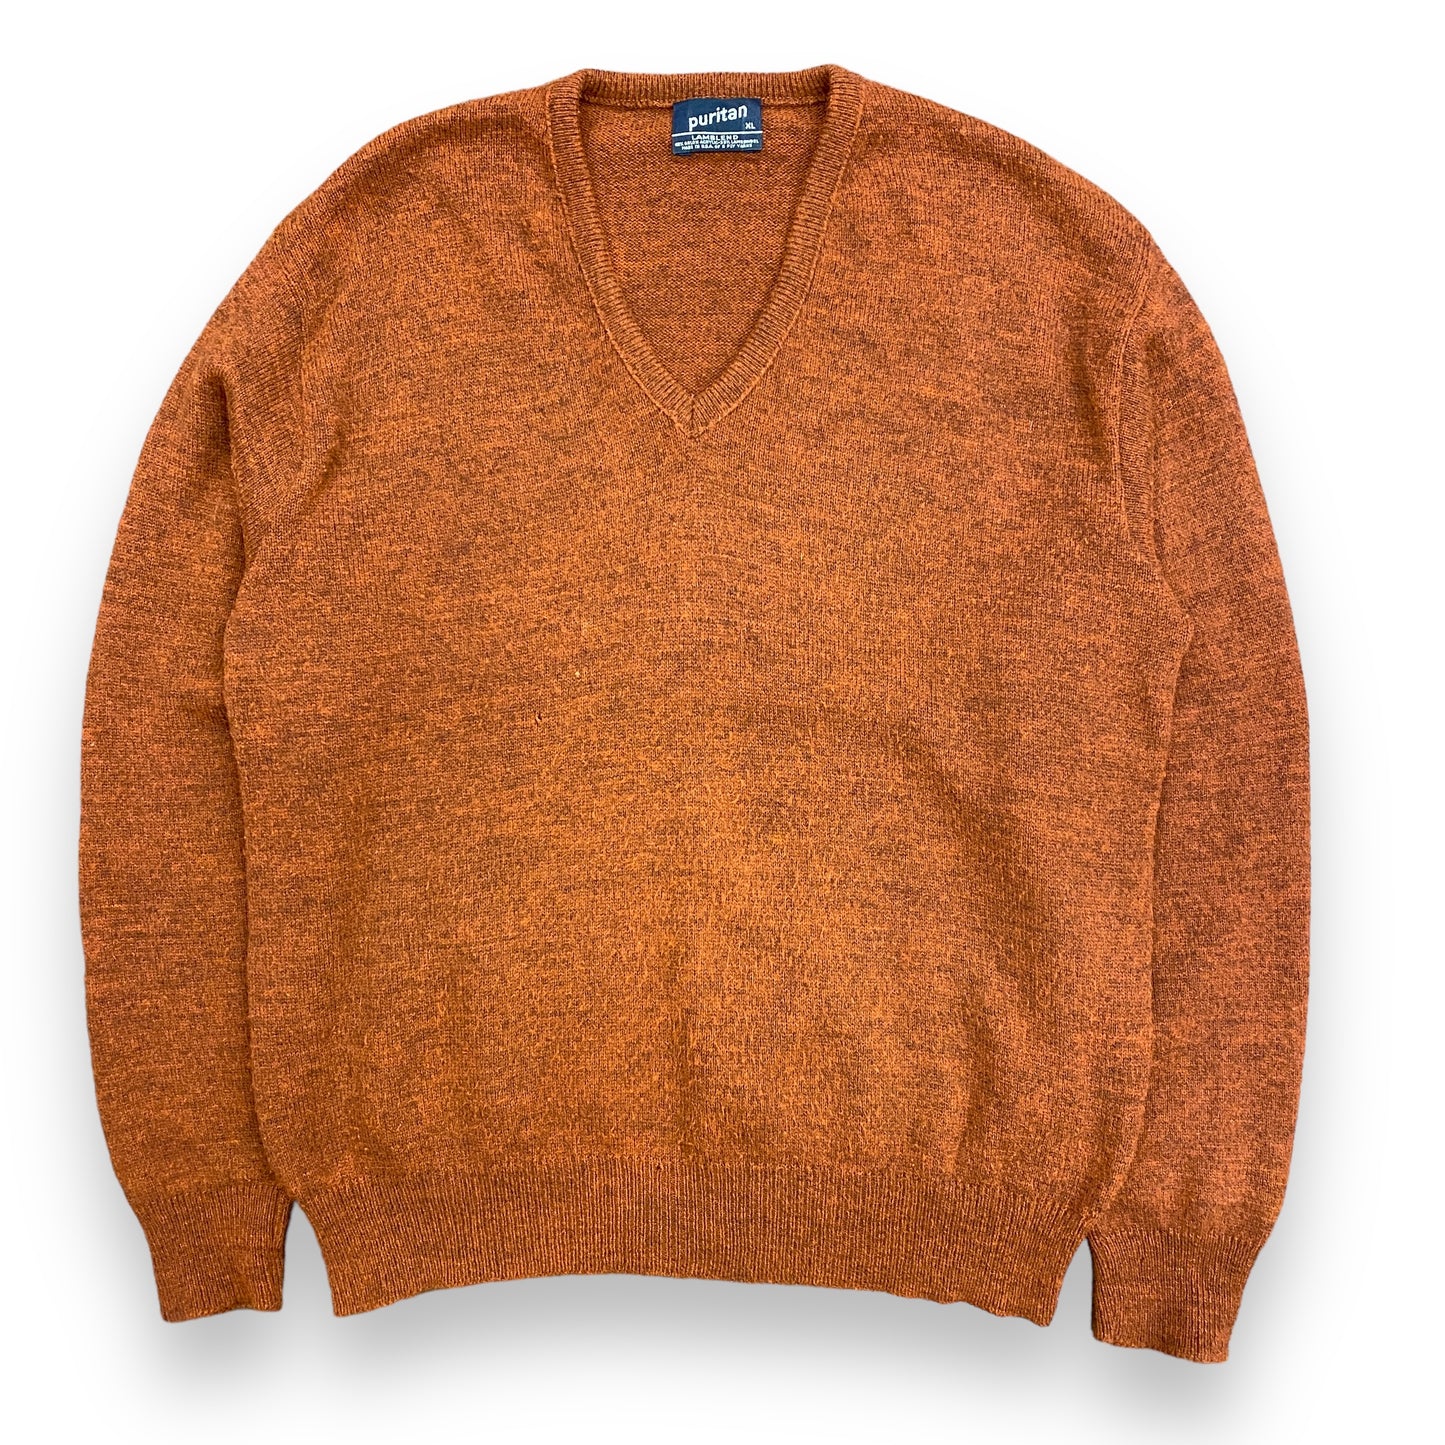 VTG Puritan "Lamblend" Burnt Orange Sweater - Size XL